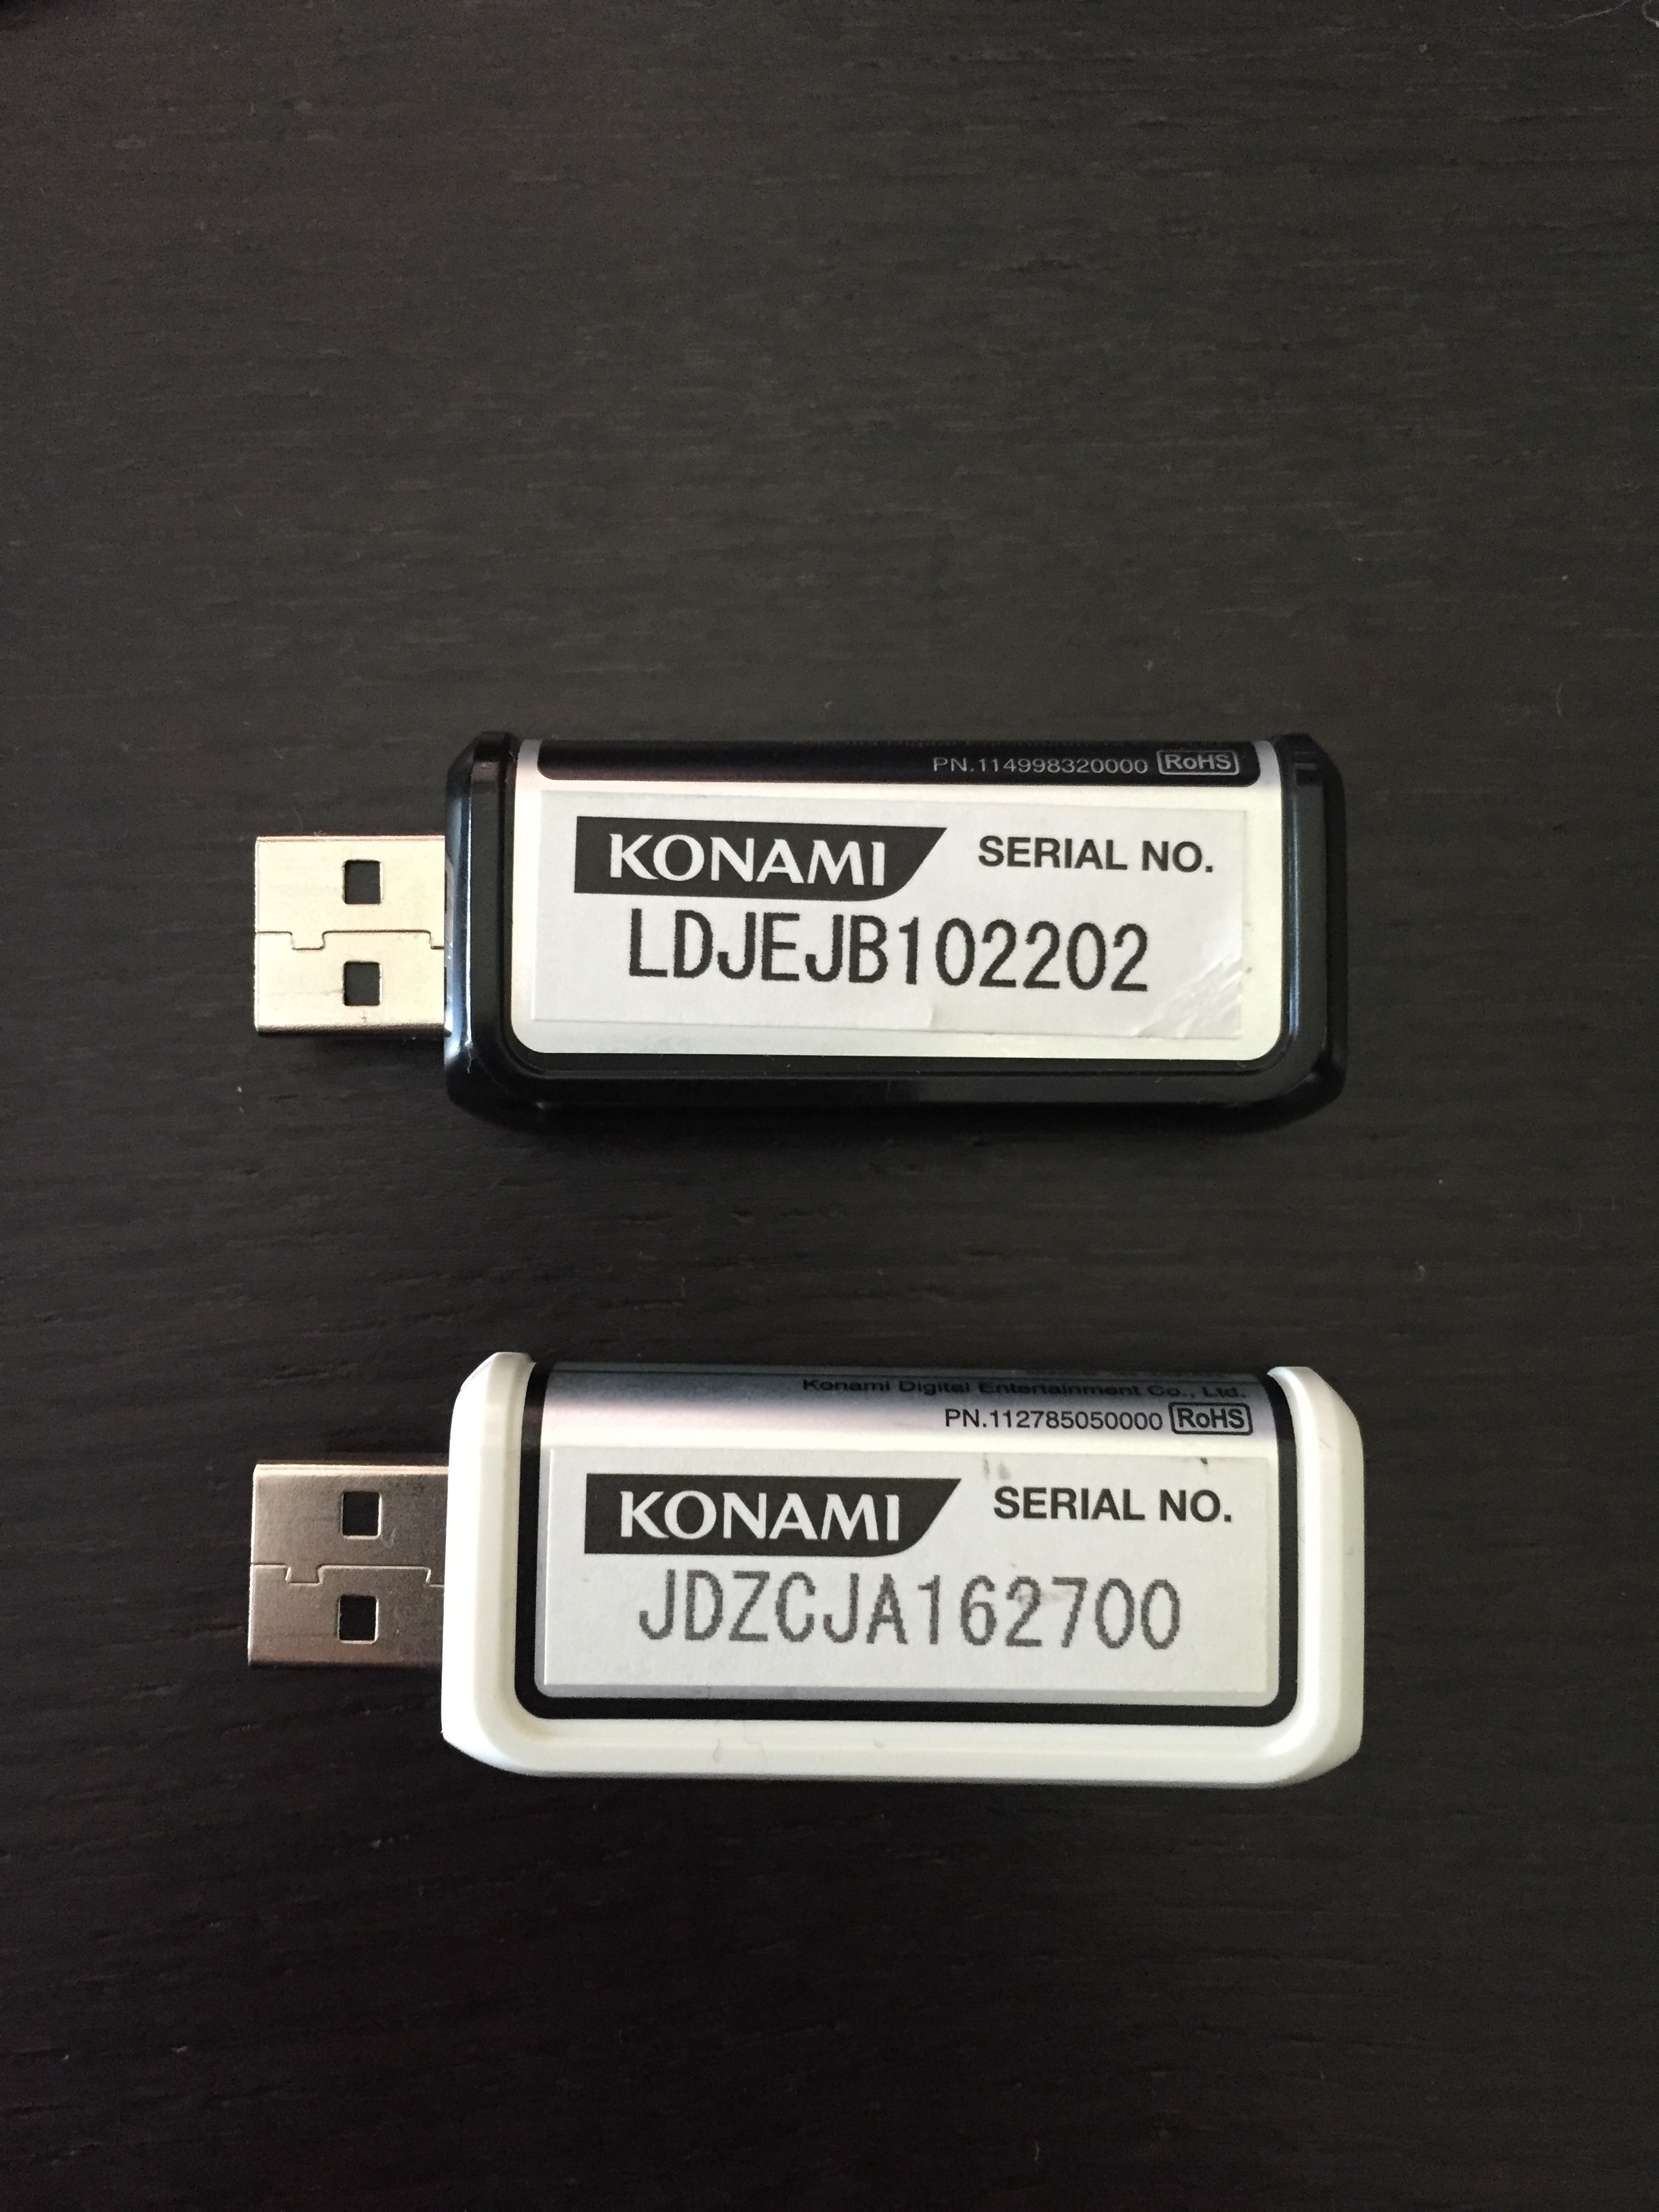 USB Security Keys (Back)